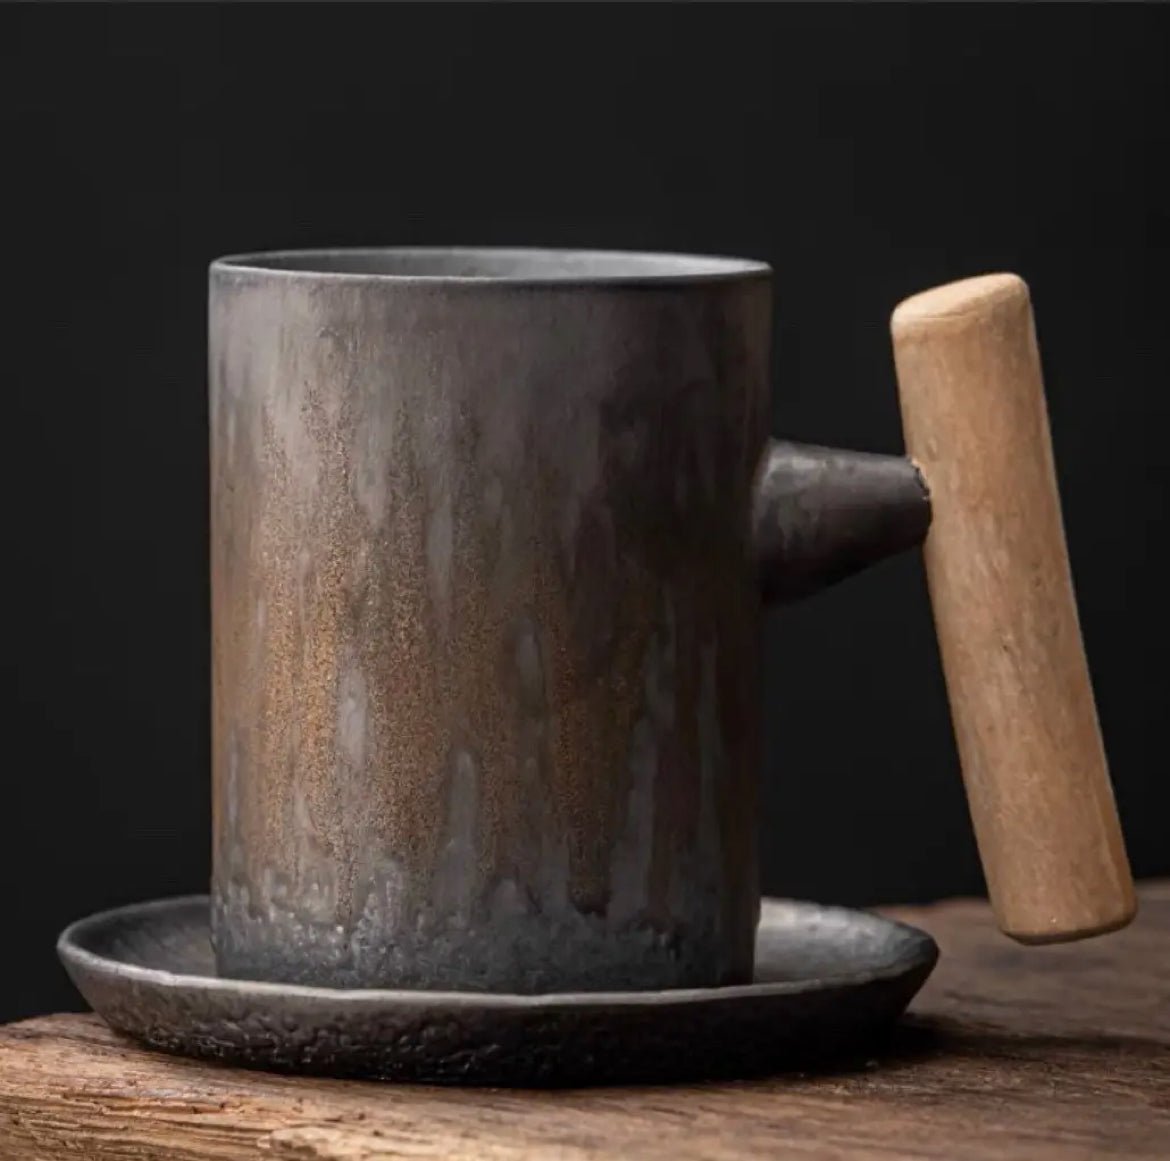 Everyday Wooden Handle Mug (Ceramic Metallic Glaze) - EcoLuxe Furnishings